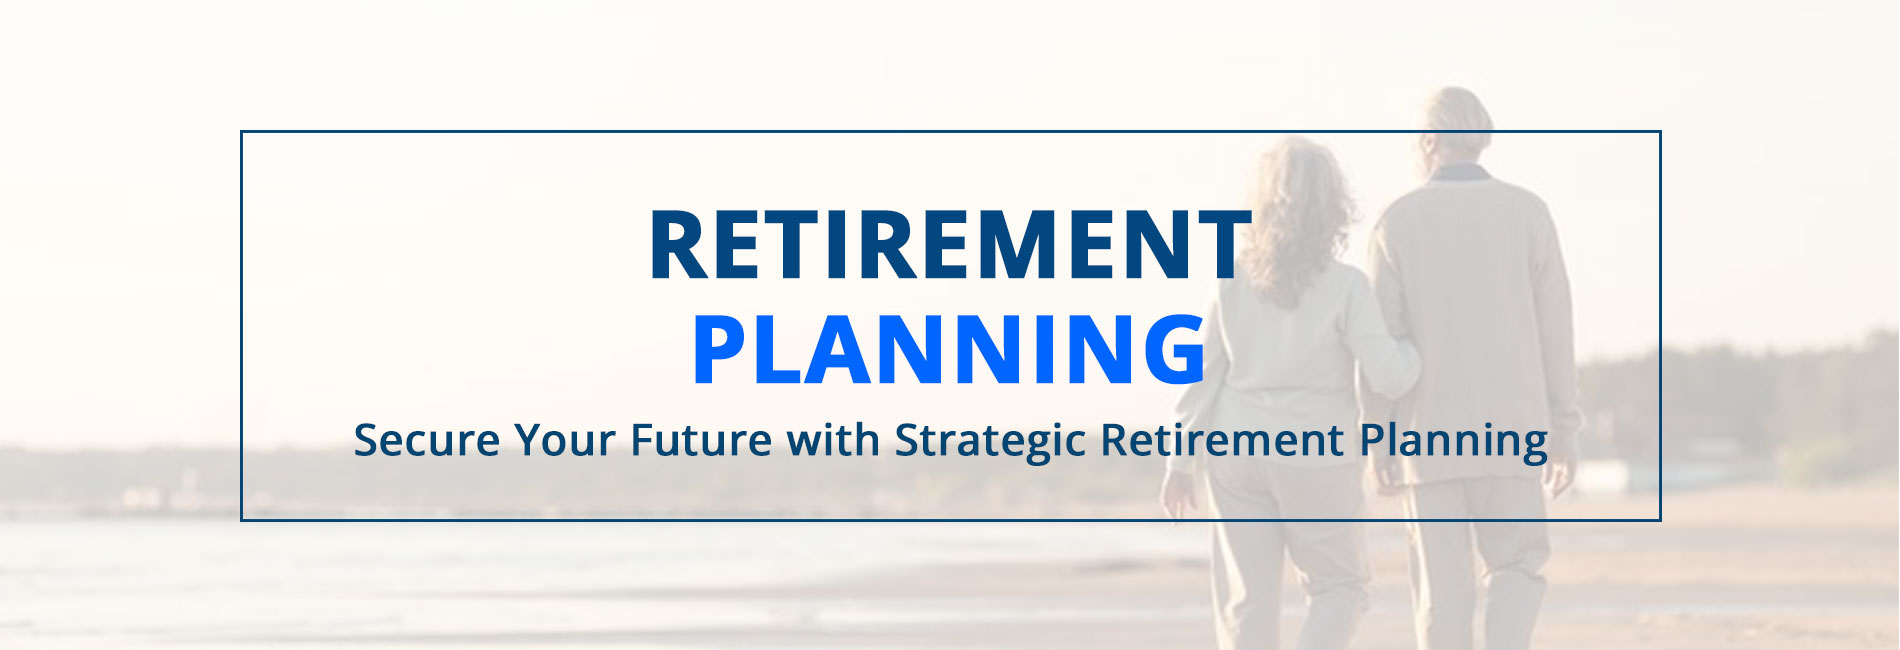 retirement planing